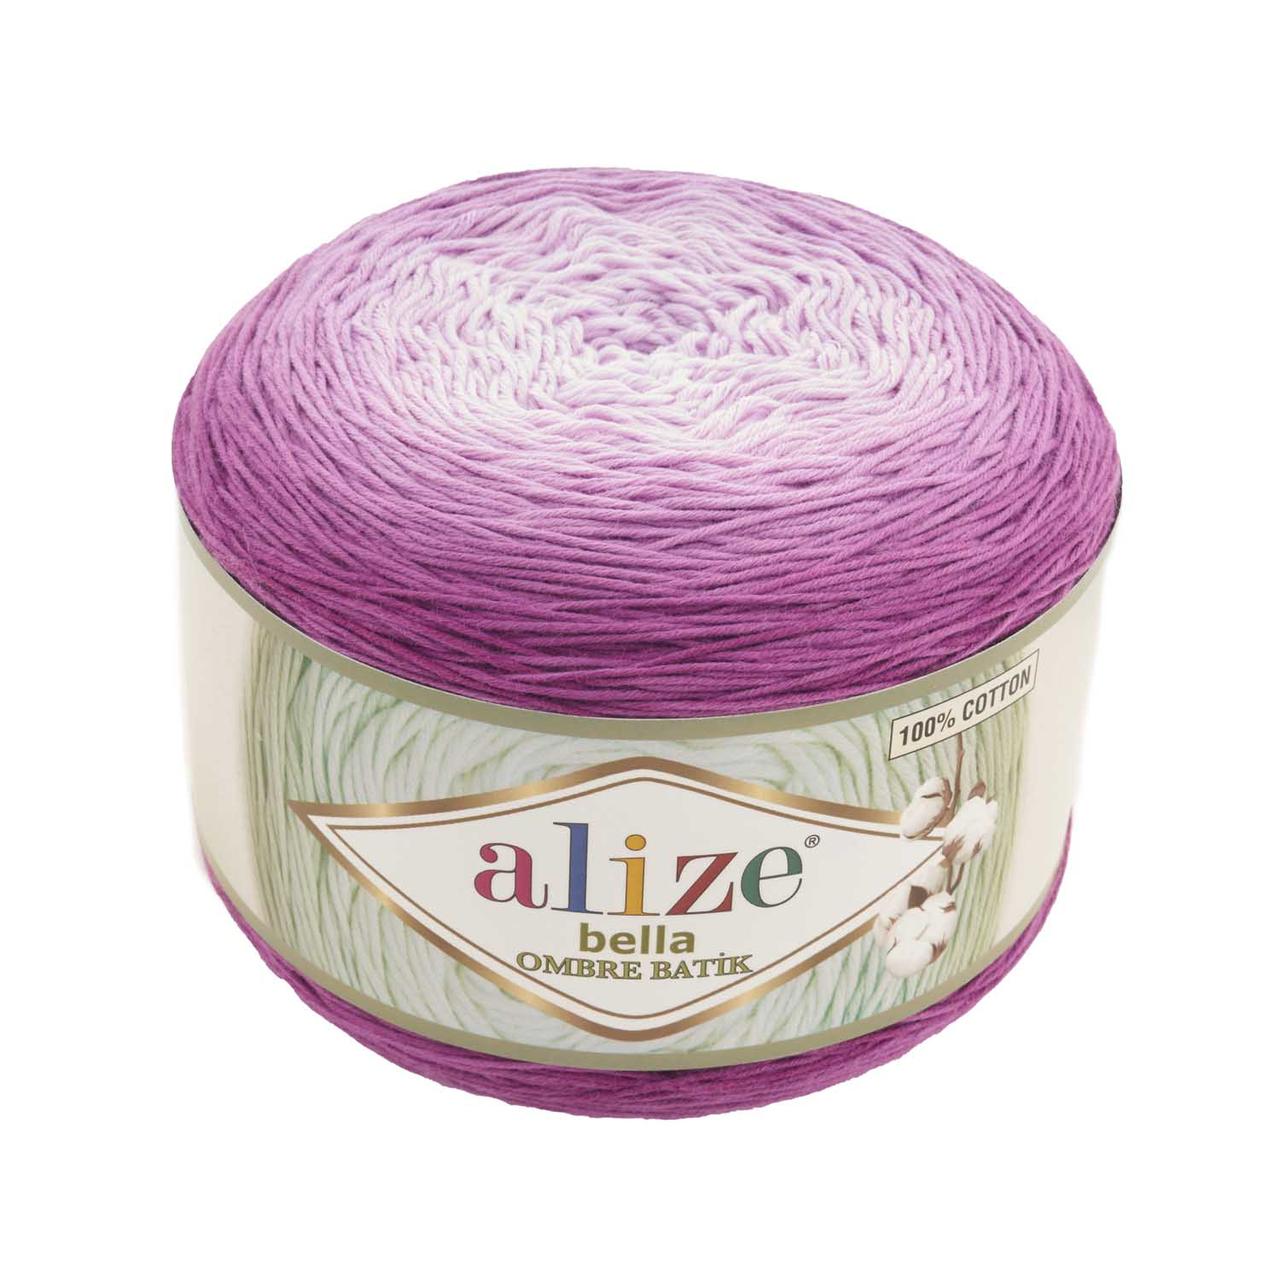 Пряжа Ализе Белла Омбре Батик (Alize Bella Ombre Batik) цвет 7429 сиренево-розовый